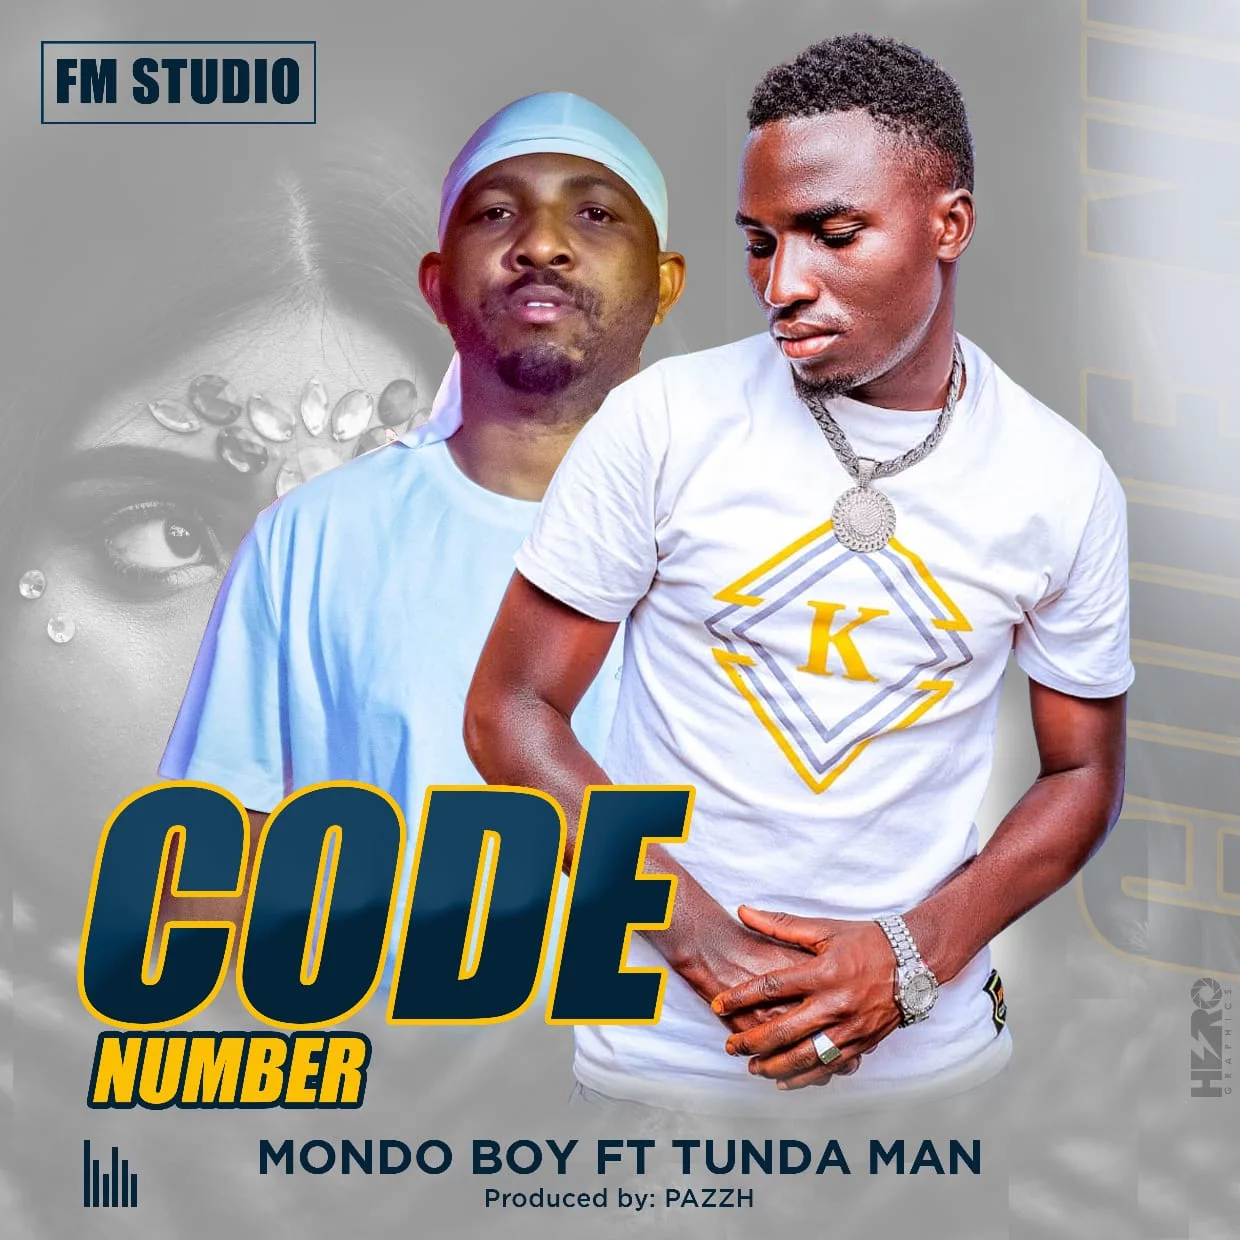 mondo boy ft tunda man code number